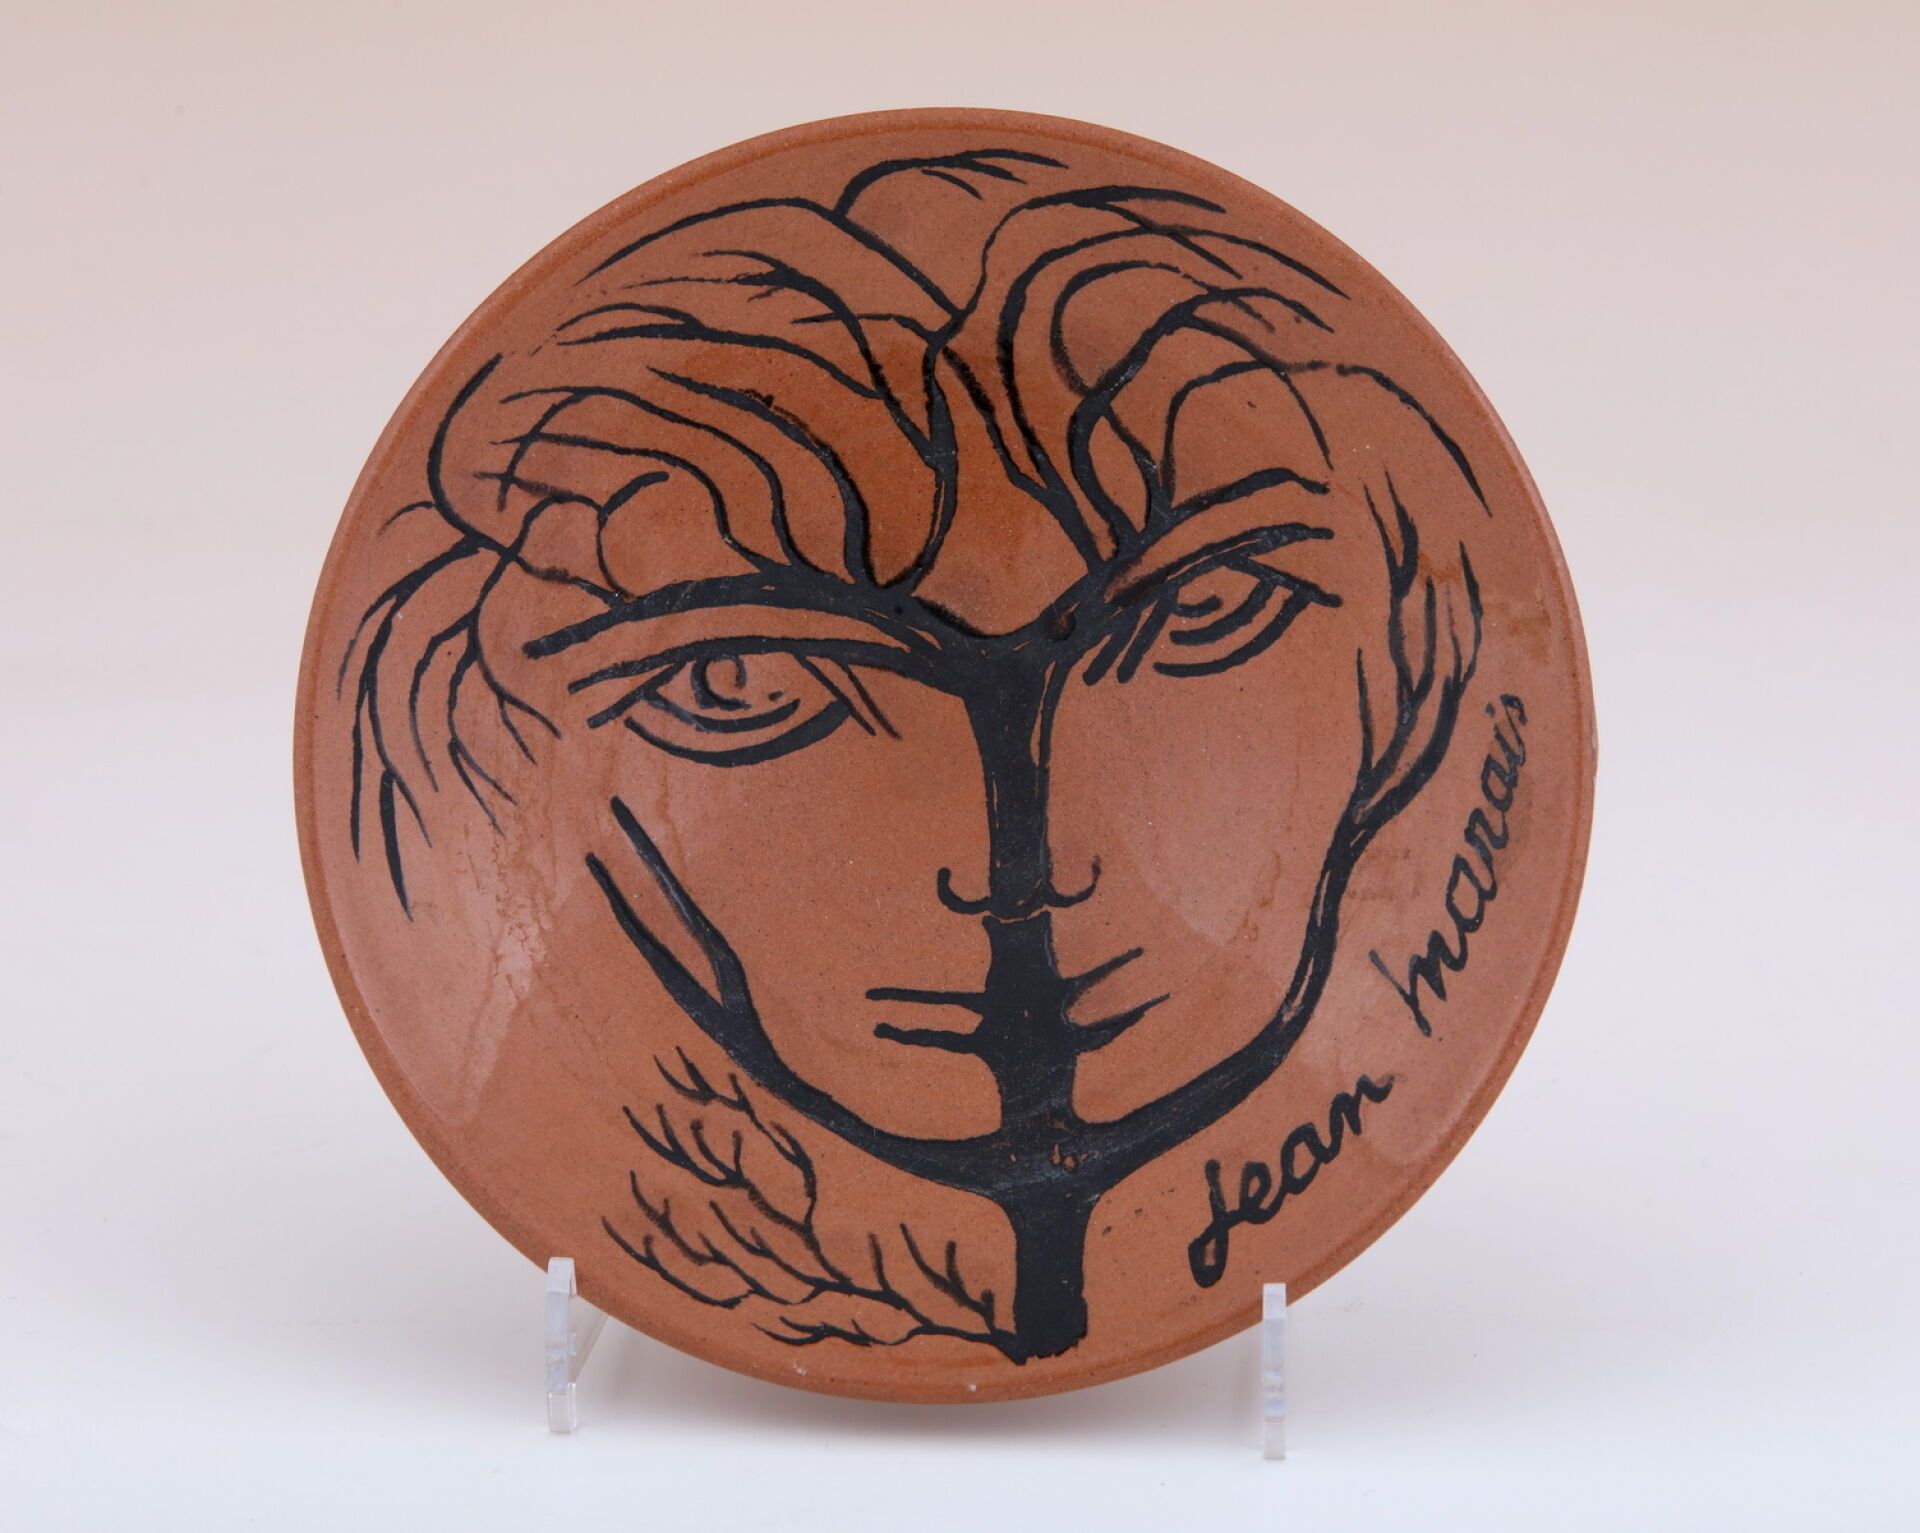 Null 让-马里斯（1913-1998）
胭脂树
赭色釉陶，已签约
长 15 厘米